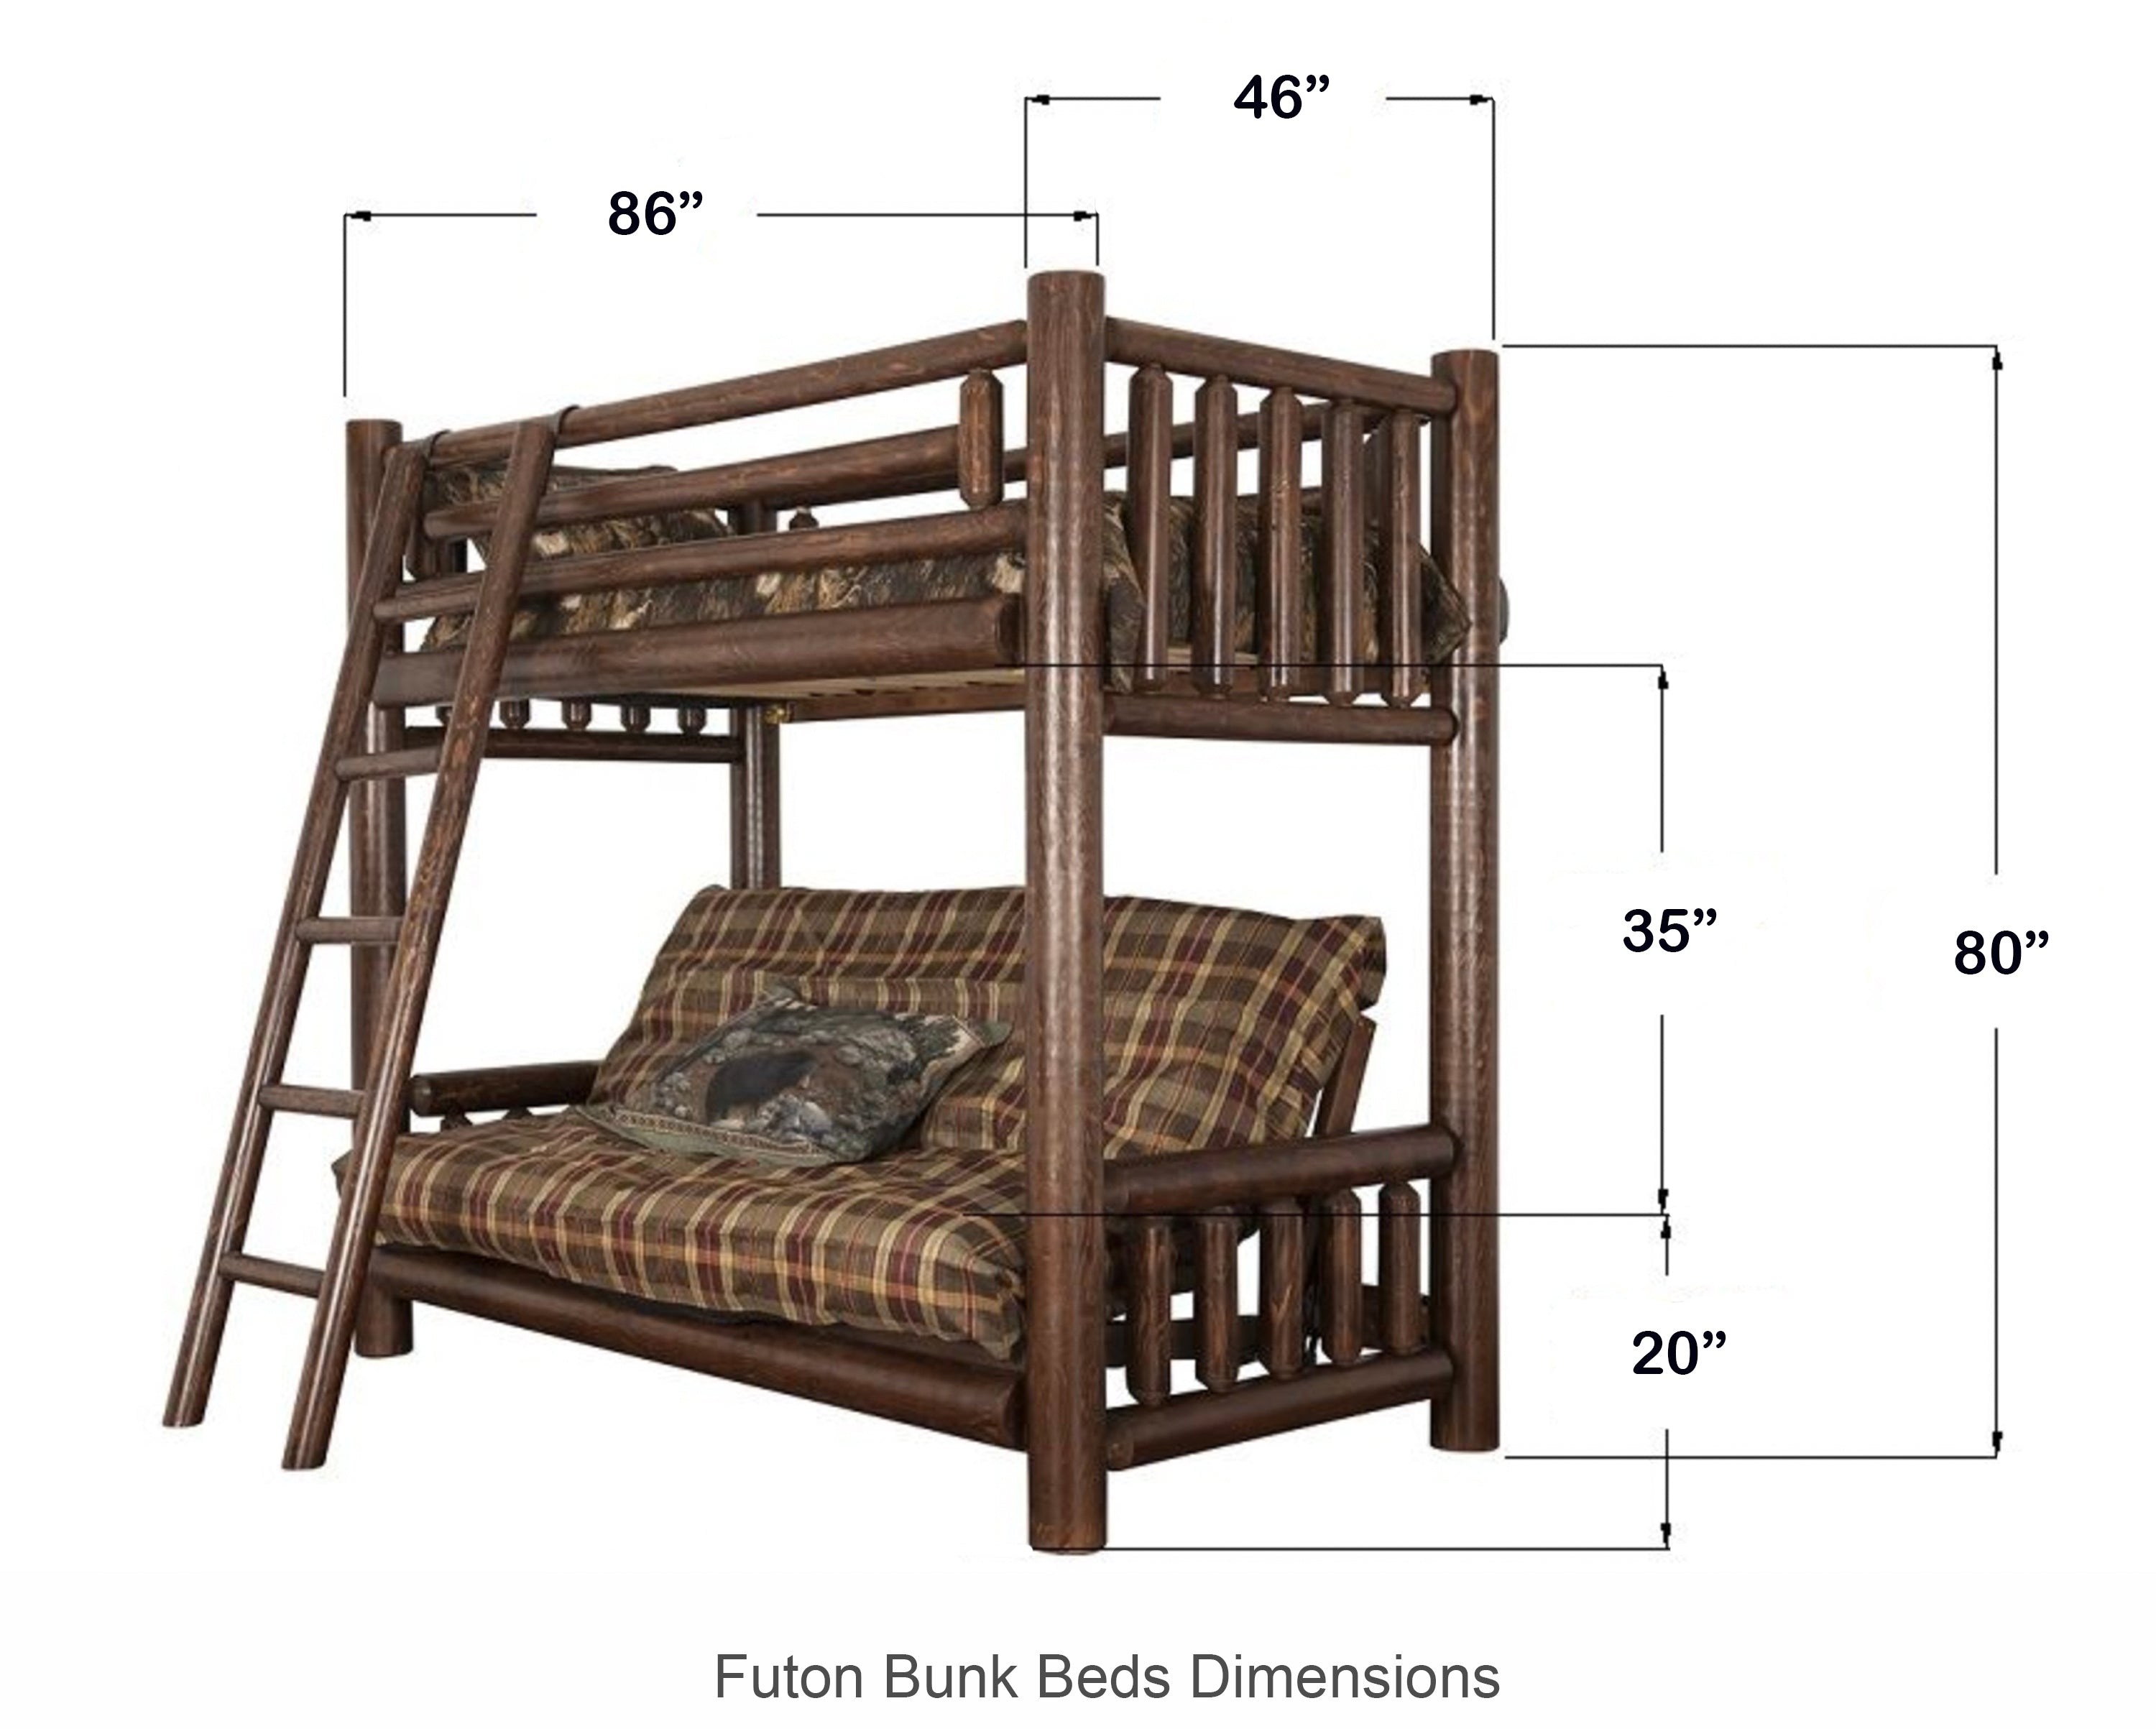 Futon Bunk Bed Dimensions